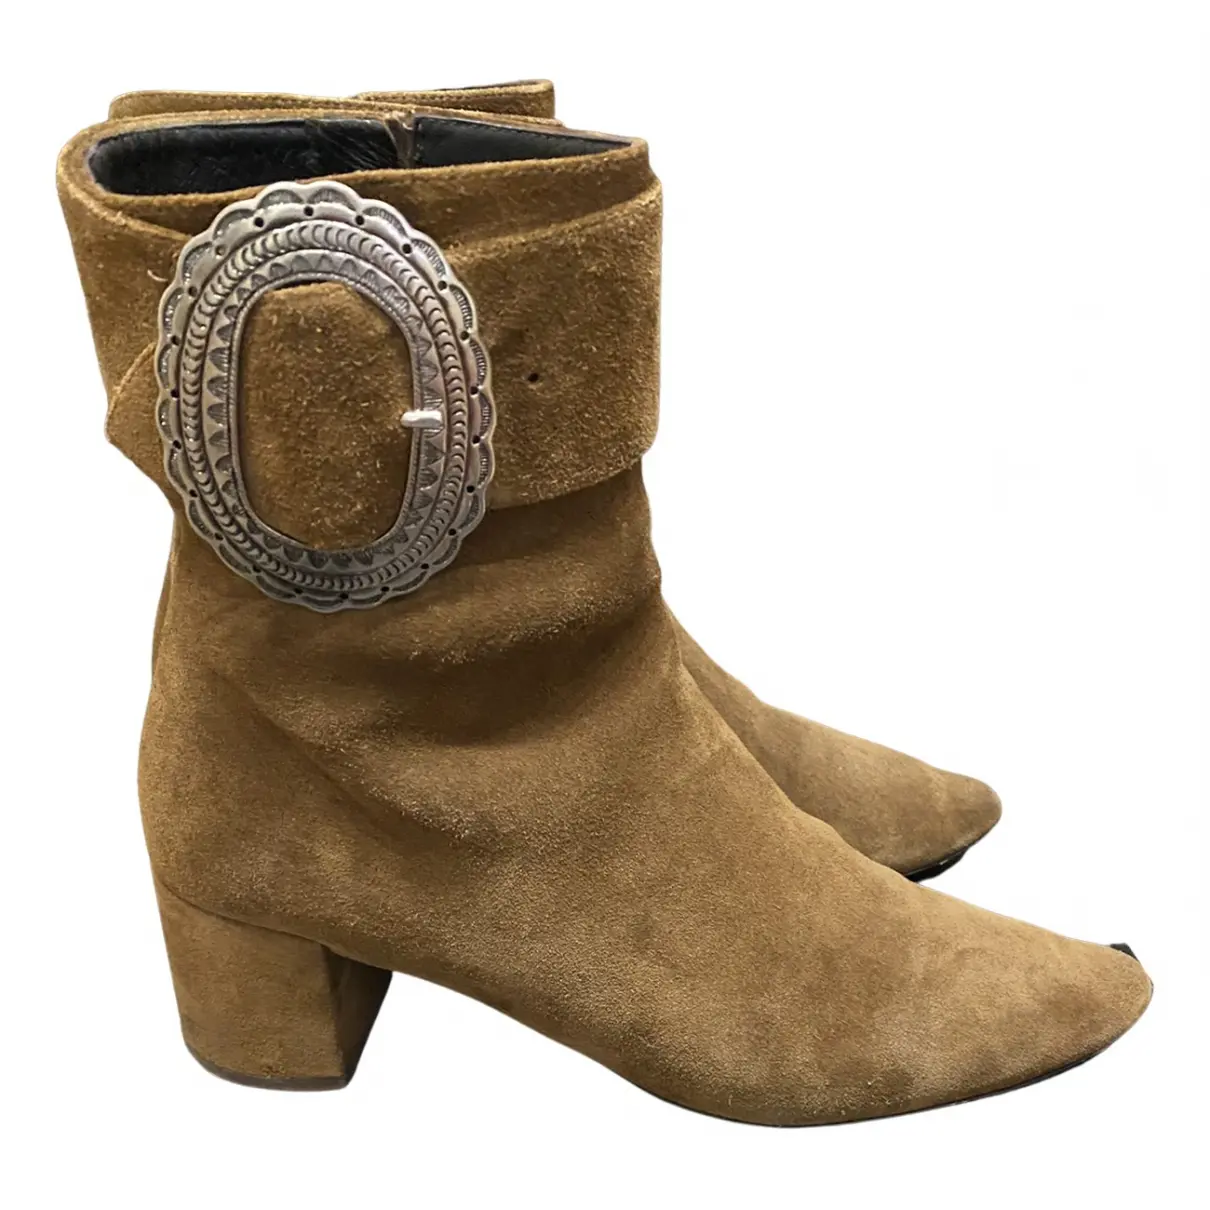 Joplin buckled boots Saint Laurent